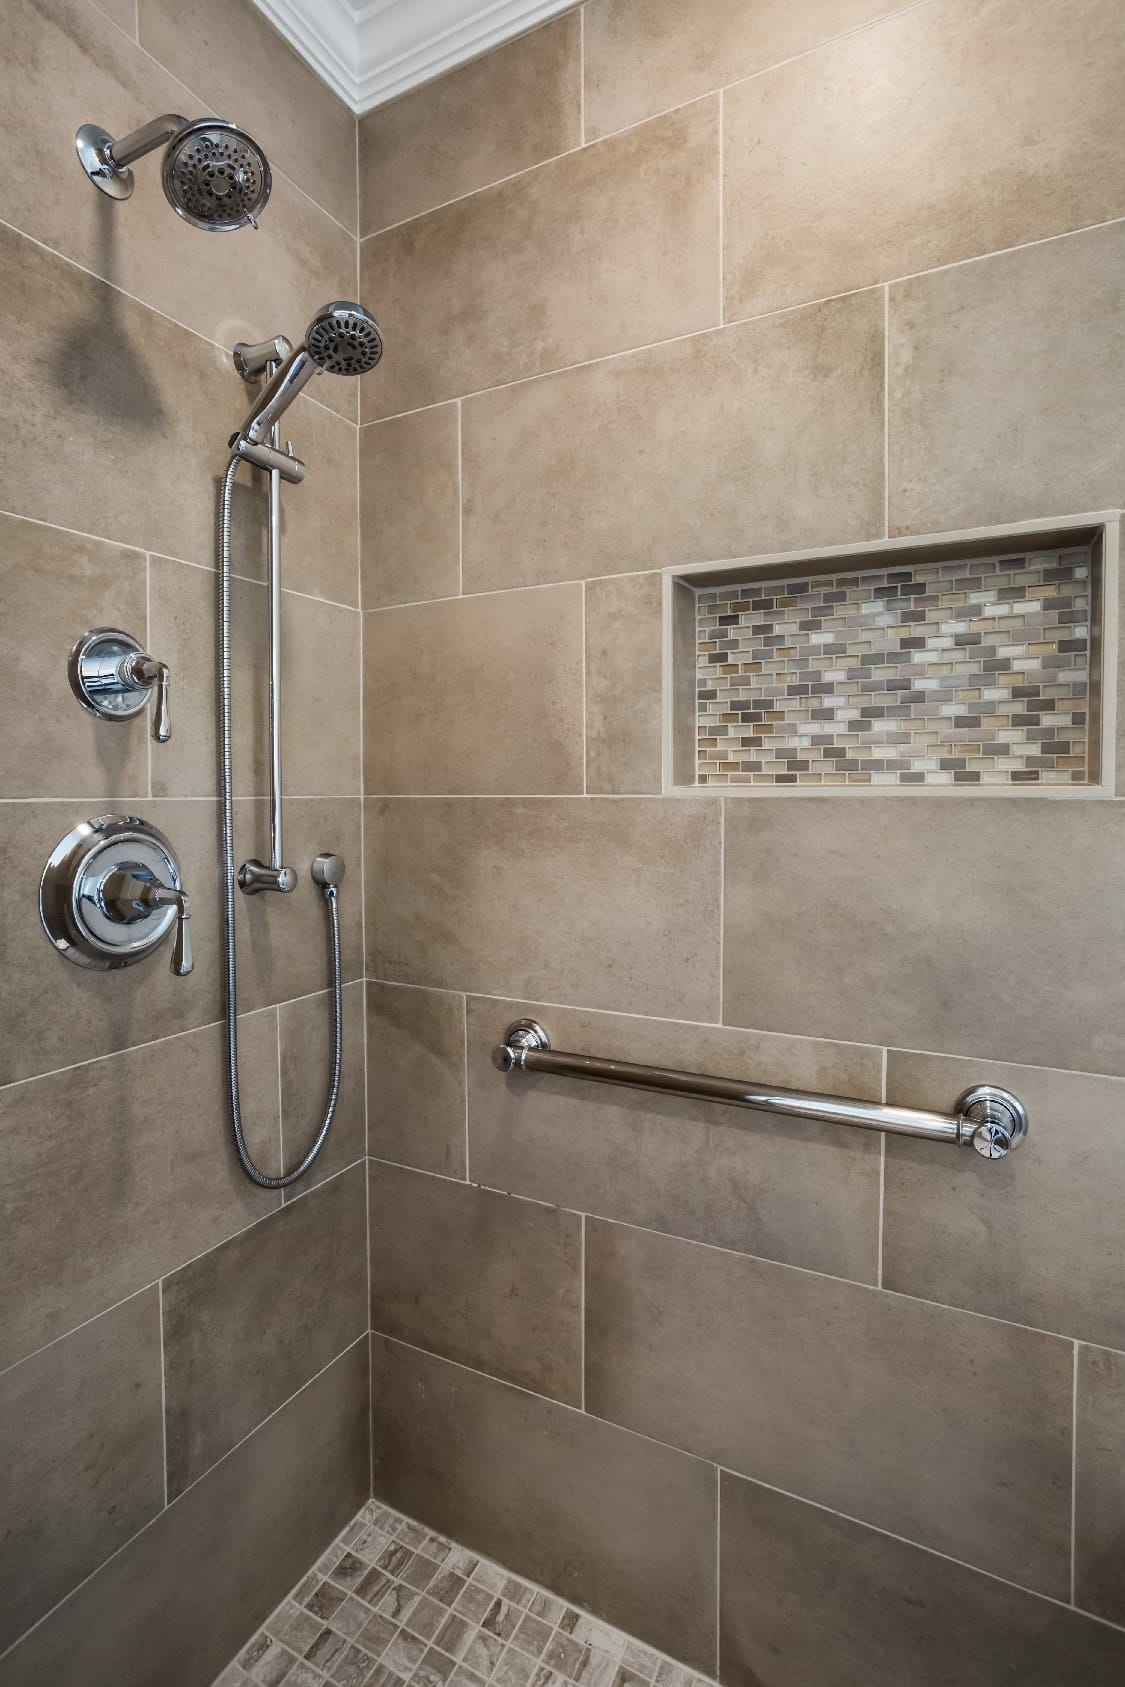 Woodbridge Master Bathroom Remodel with MSI Capella Sand tile walls and tile floor in MSI Bernini Bianco